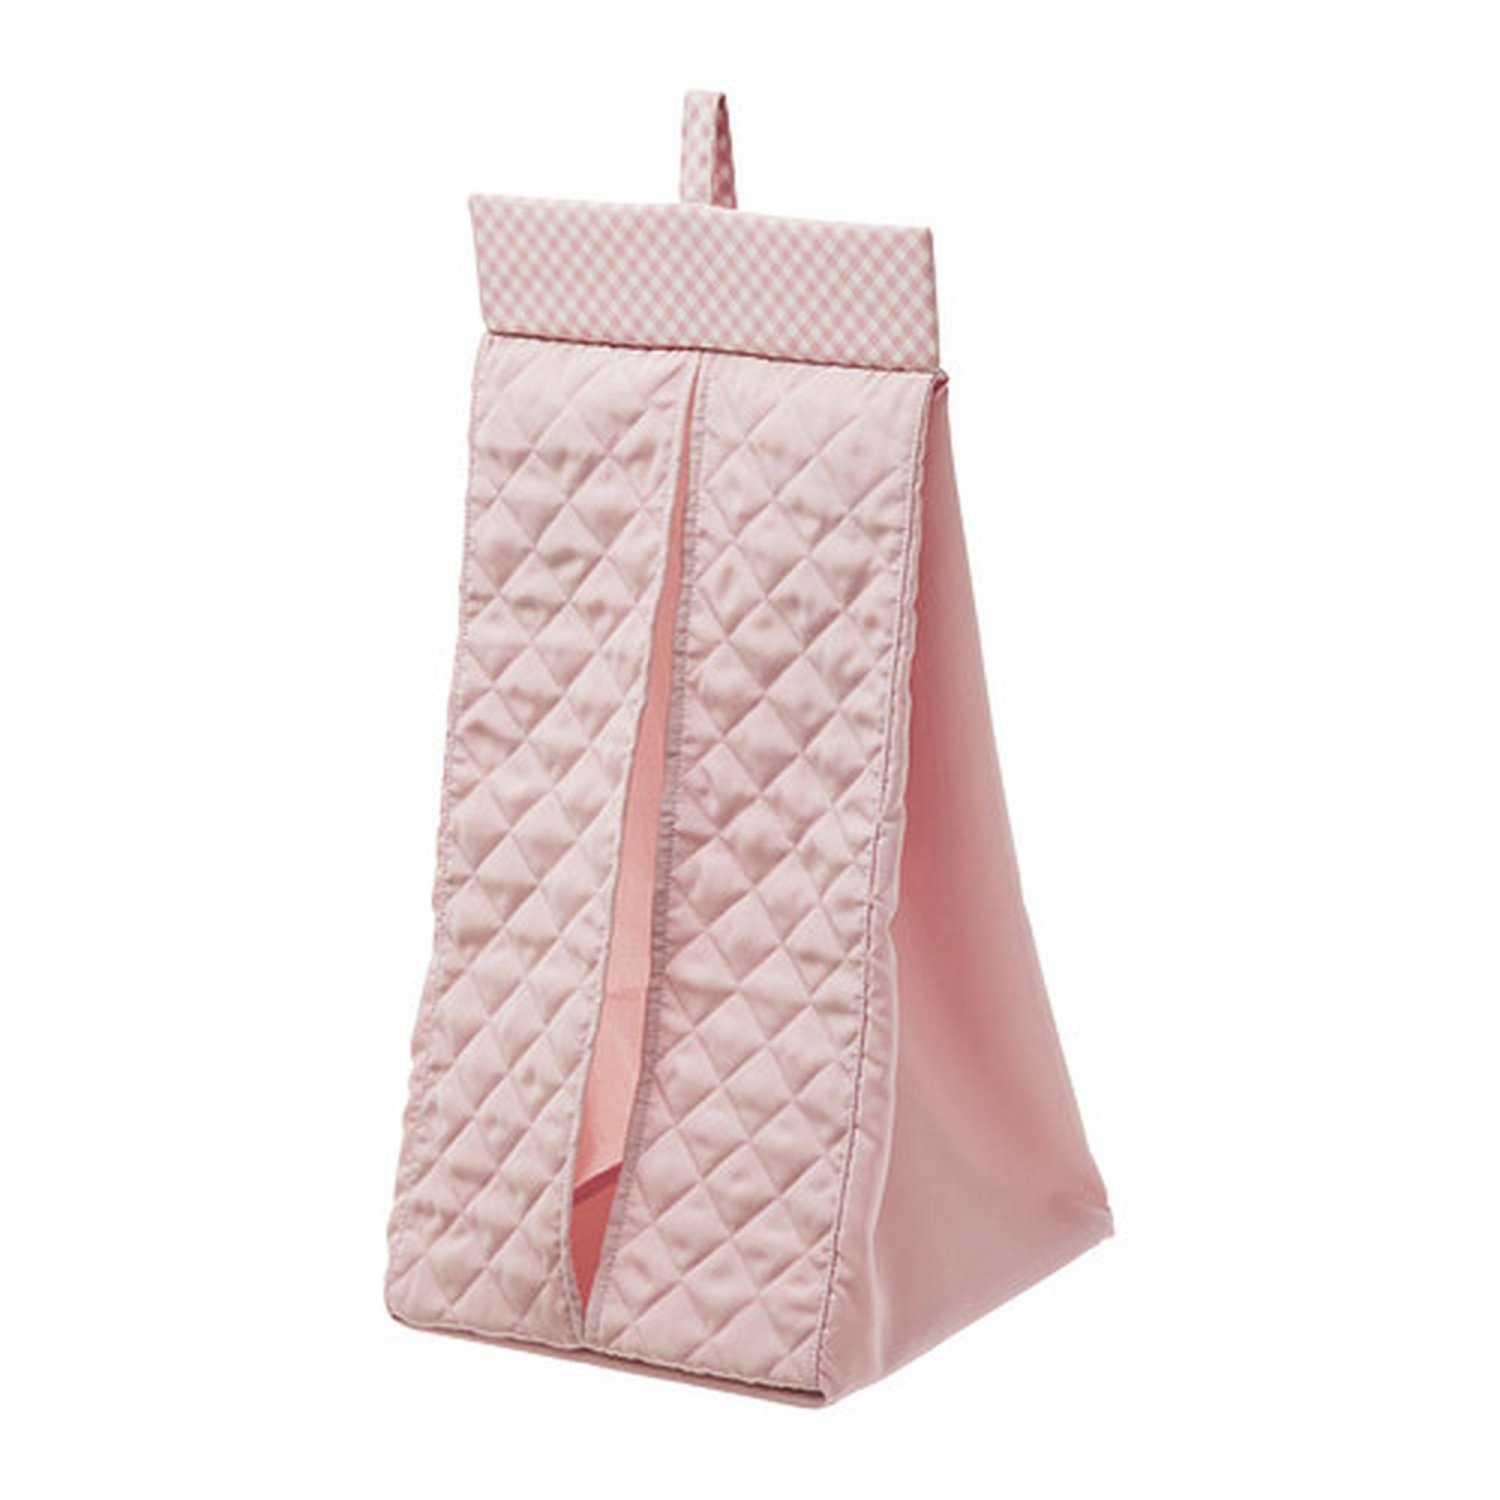 ikea-nanig-diaper-stacker-light-pink-baby-nursery-storage-bag-girl